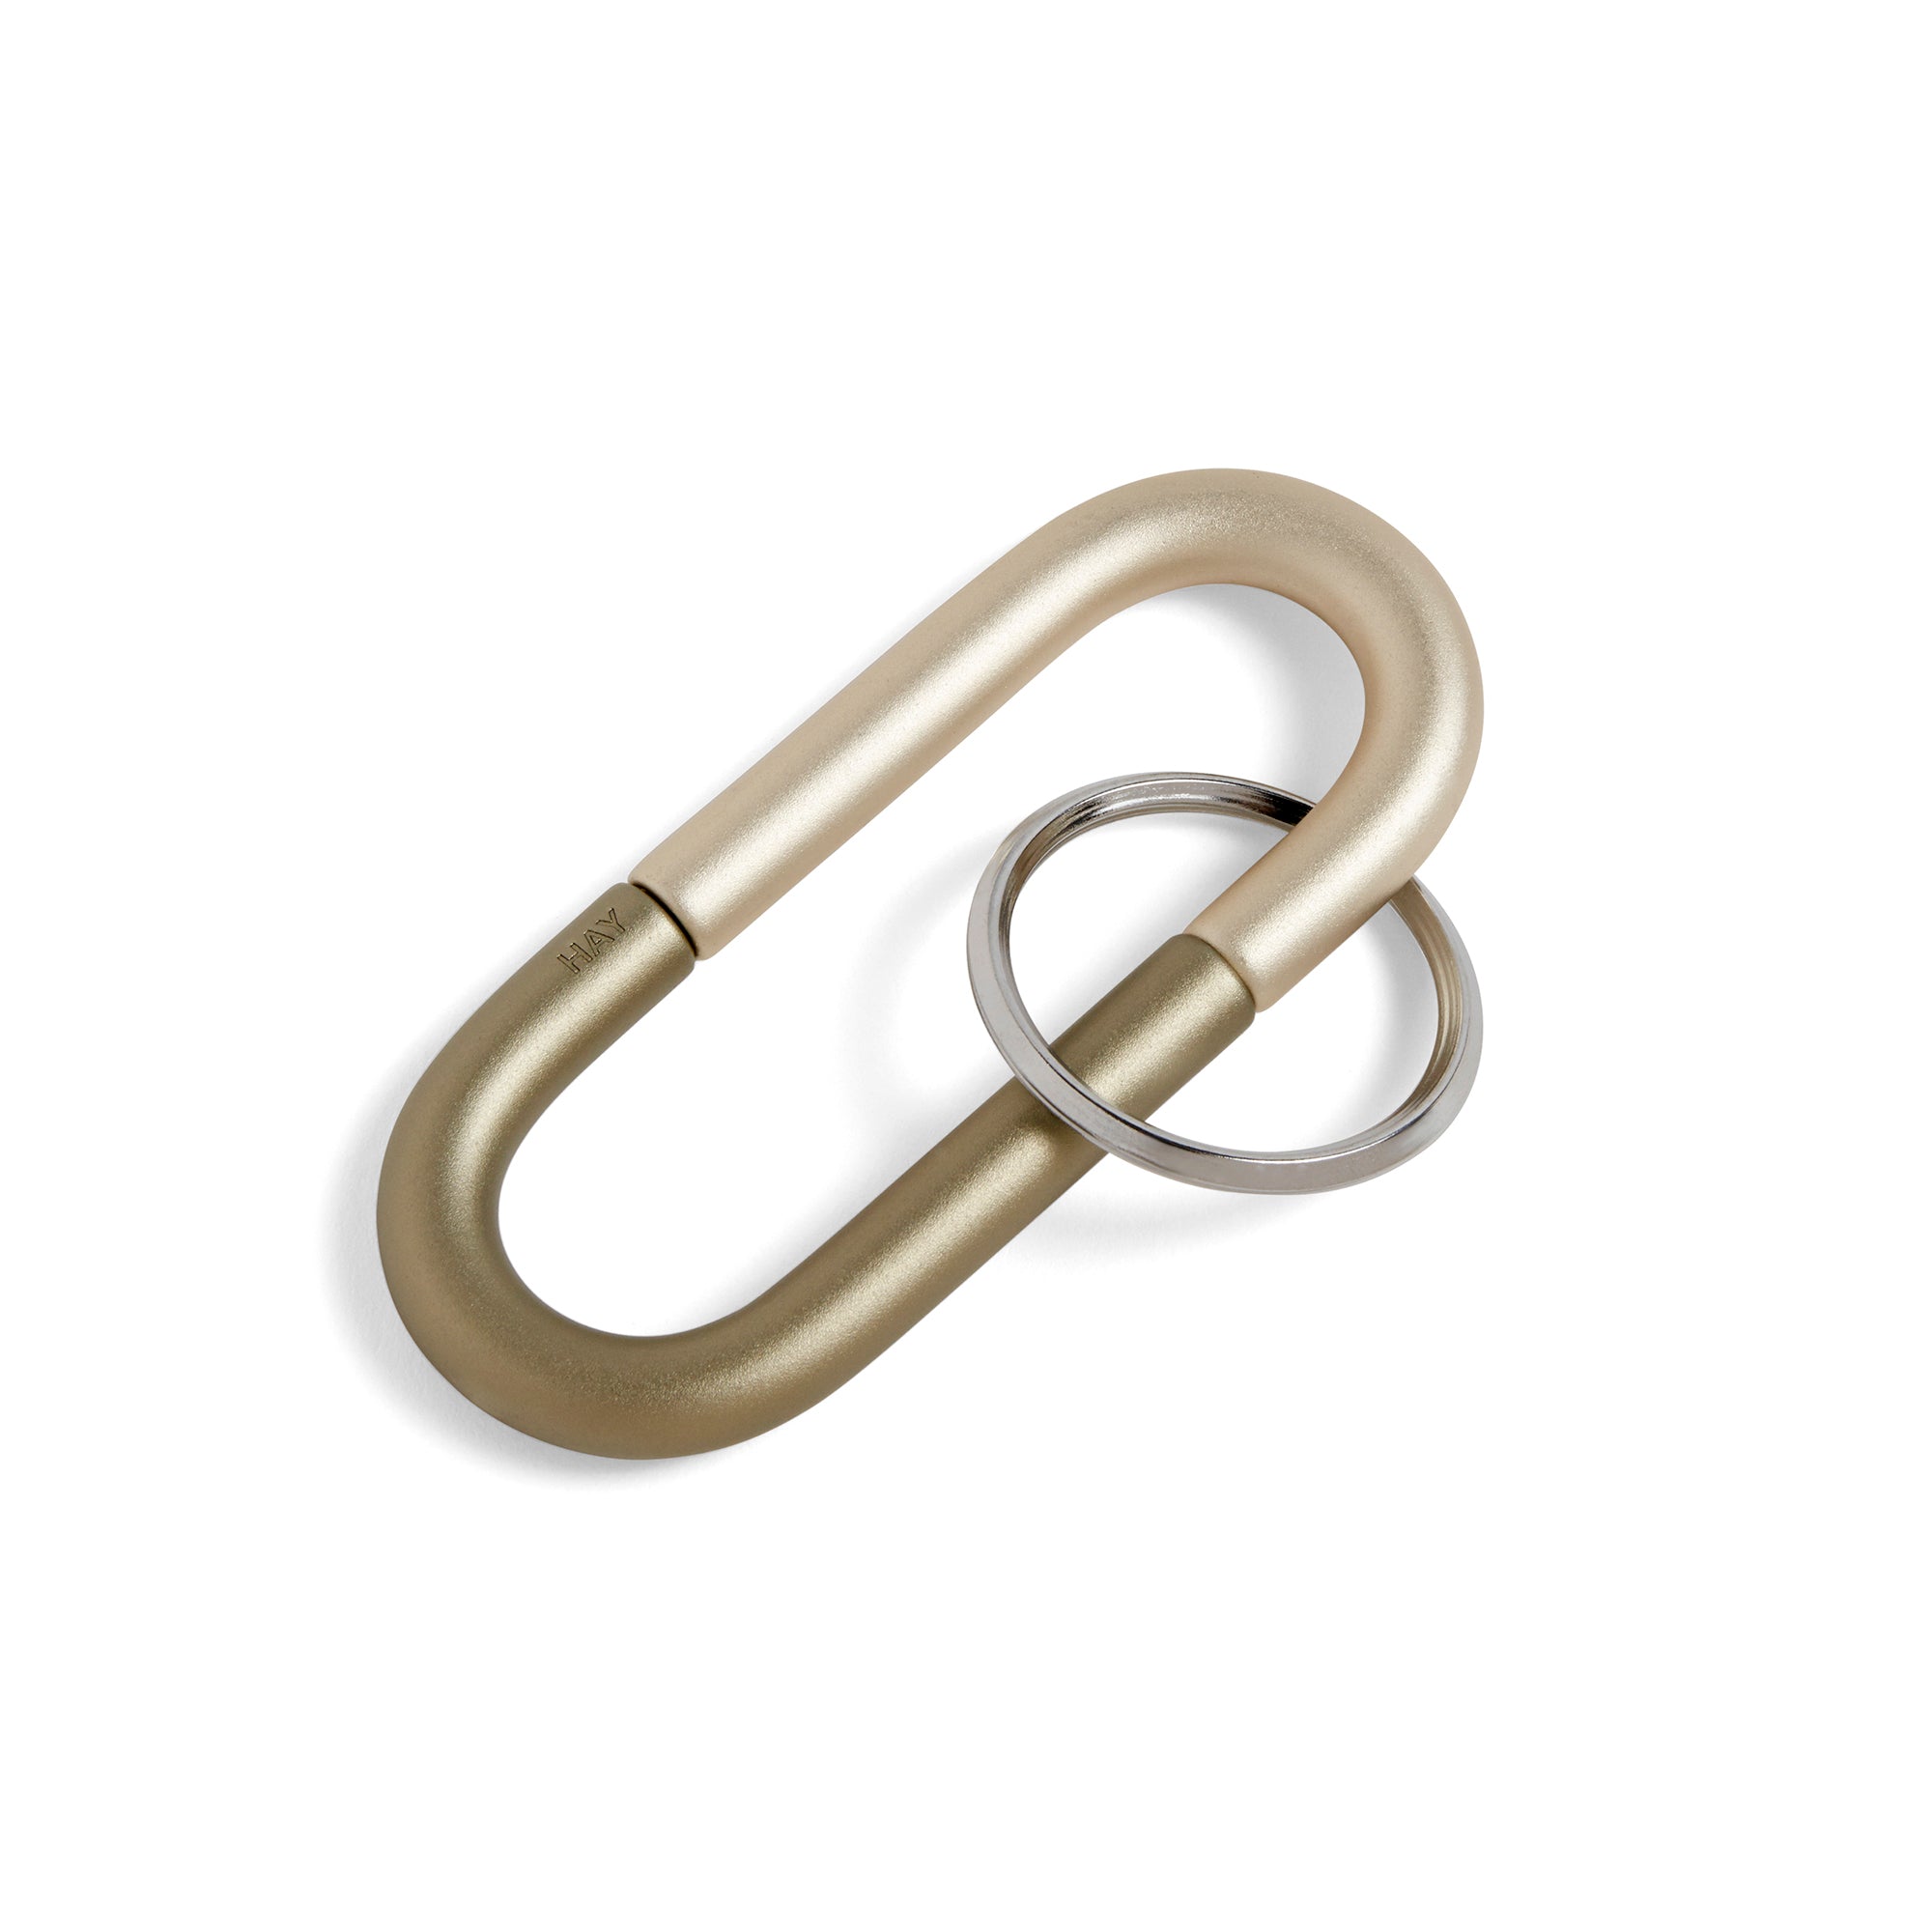 Cane Key Ring, breloc pentru chei